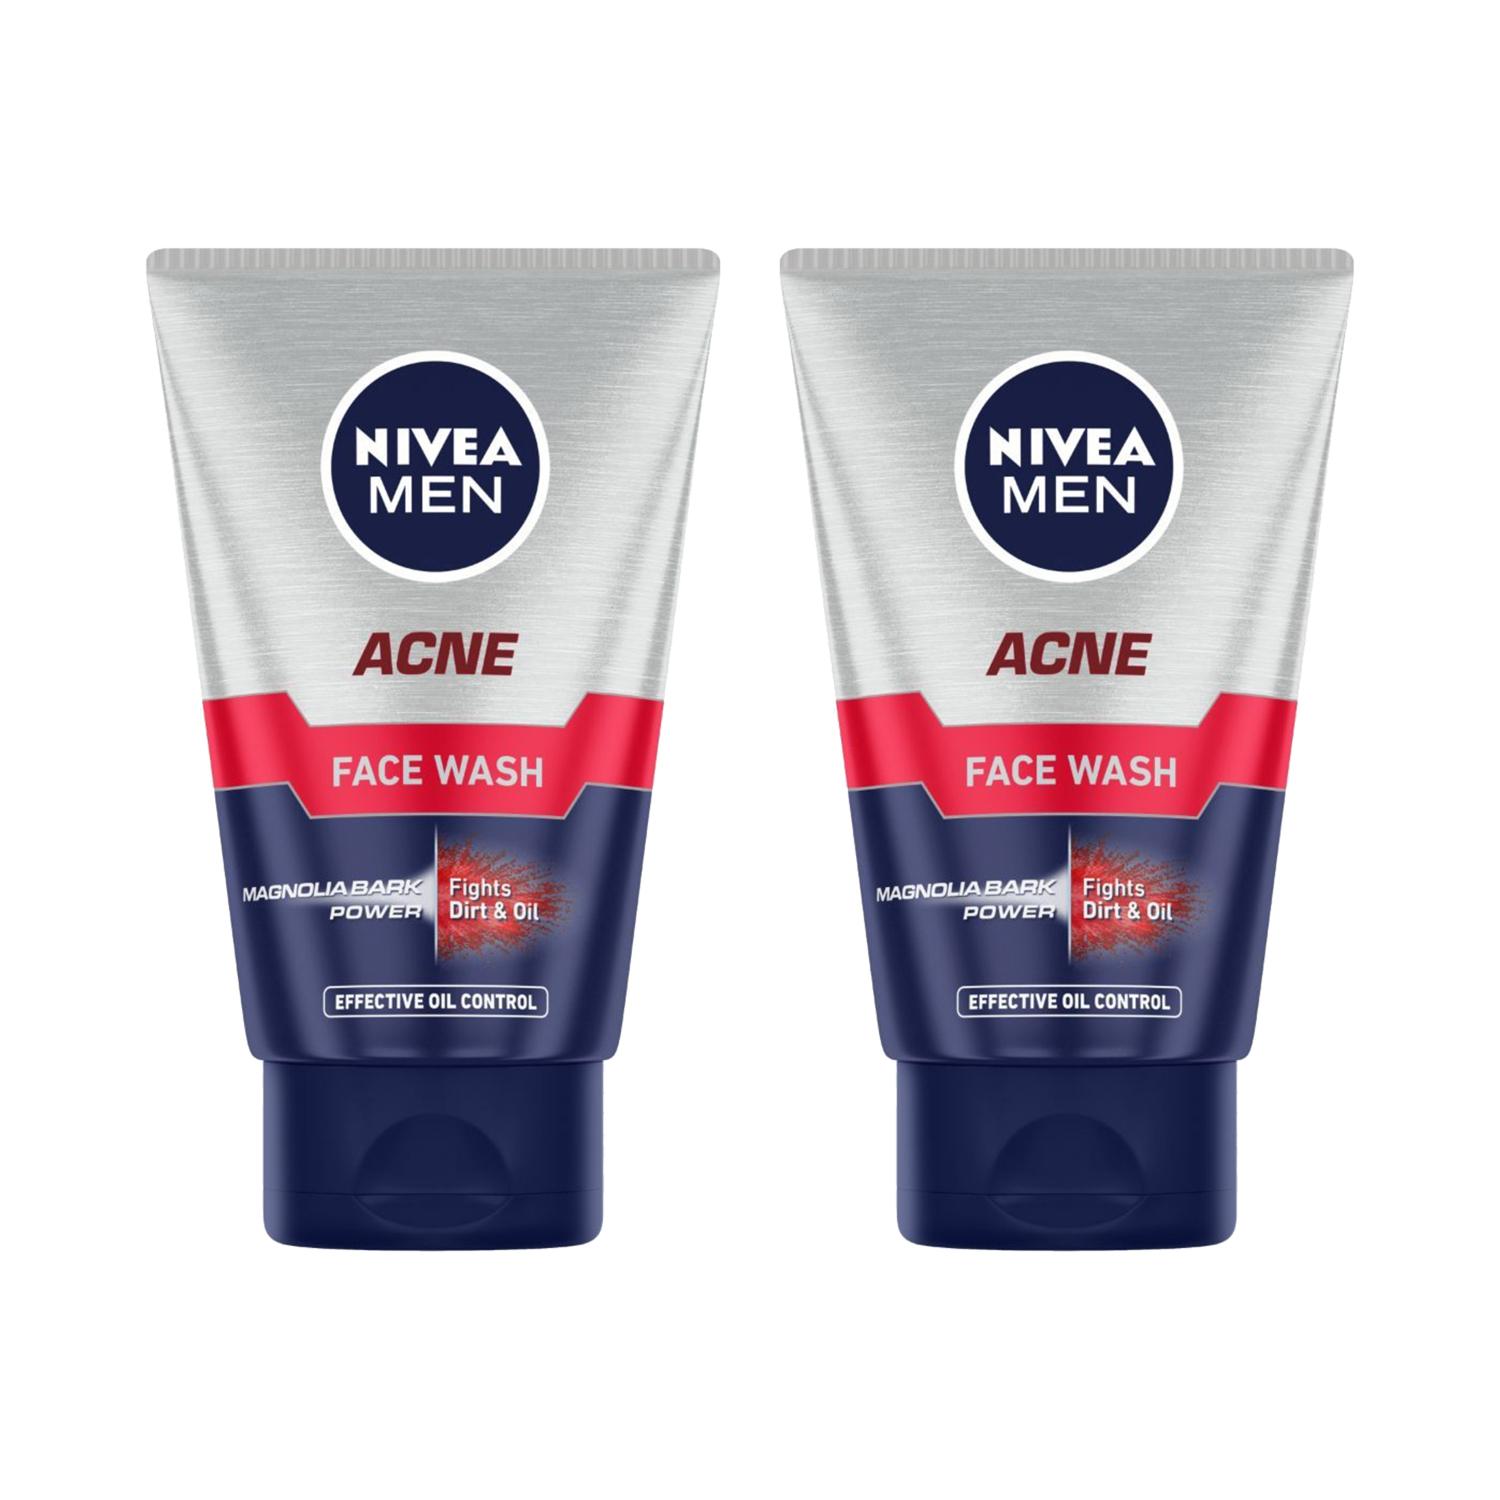 Nivea | Nivea Men Cleansing Acne Facewash Large (100 g) (Pack Of 2) Combo